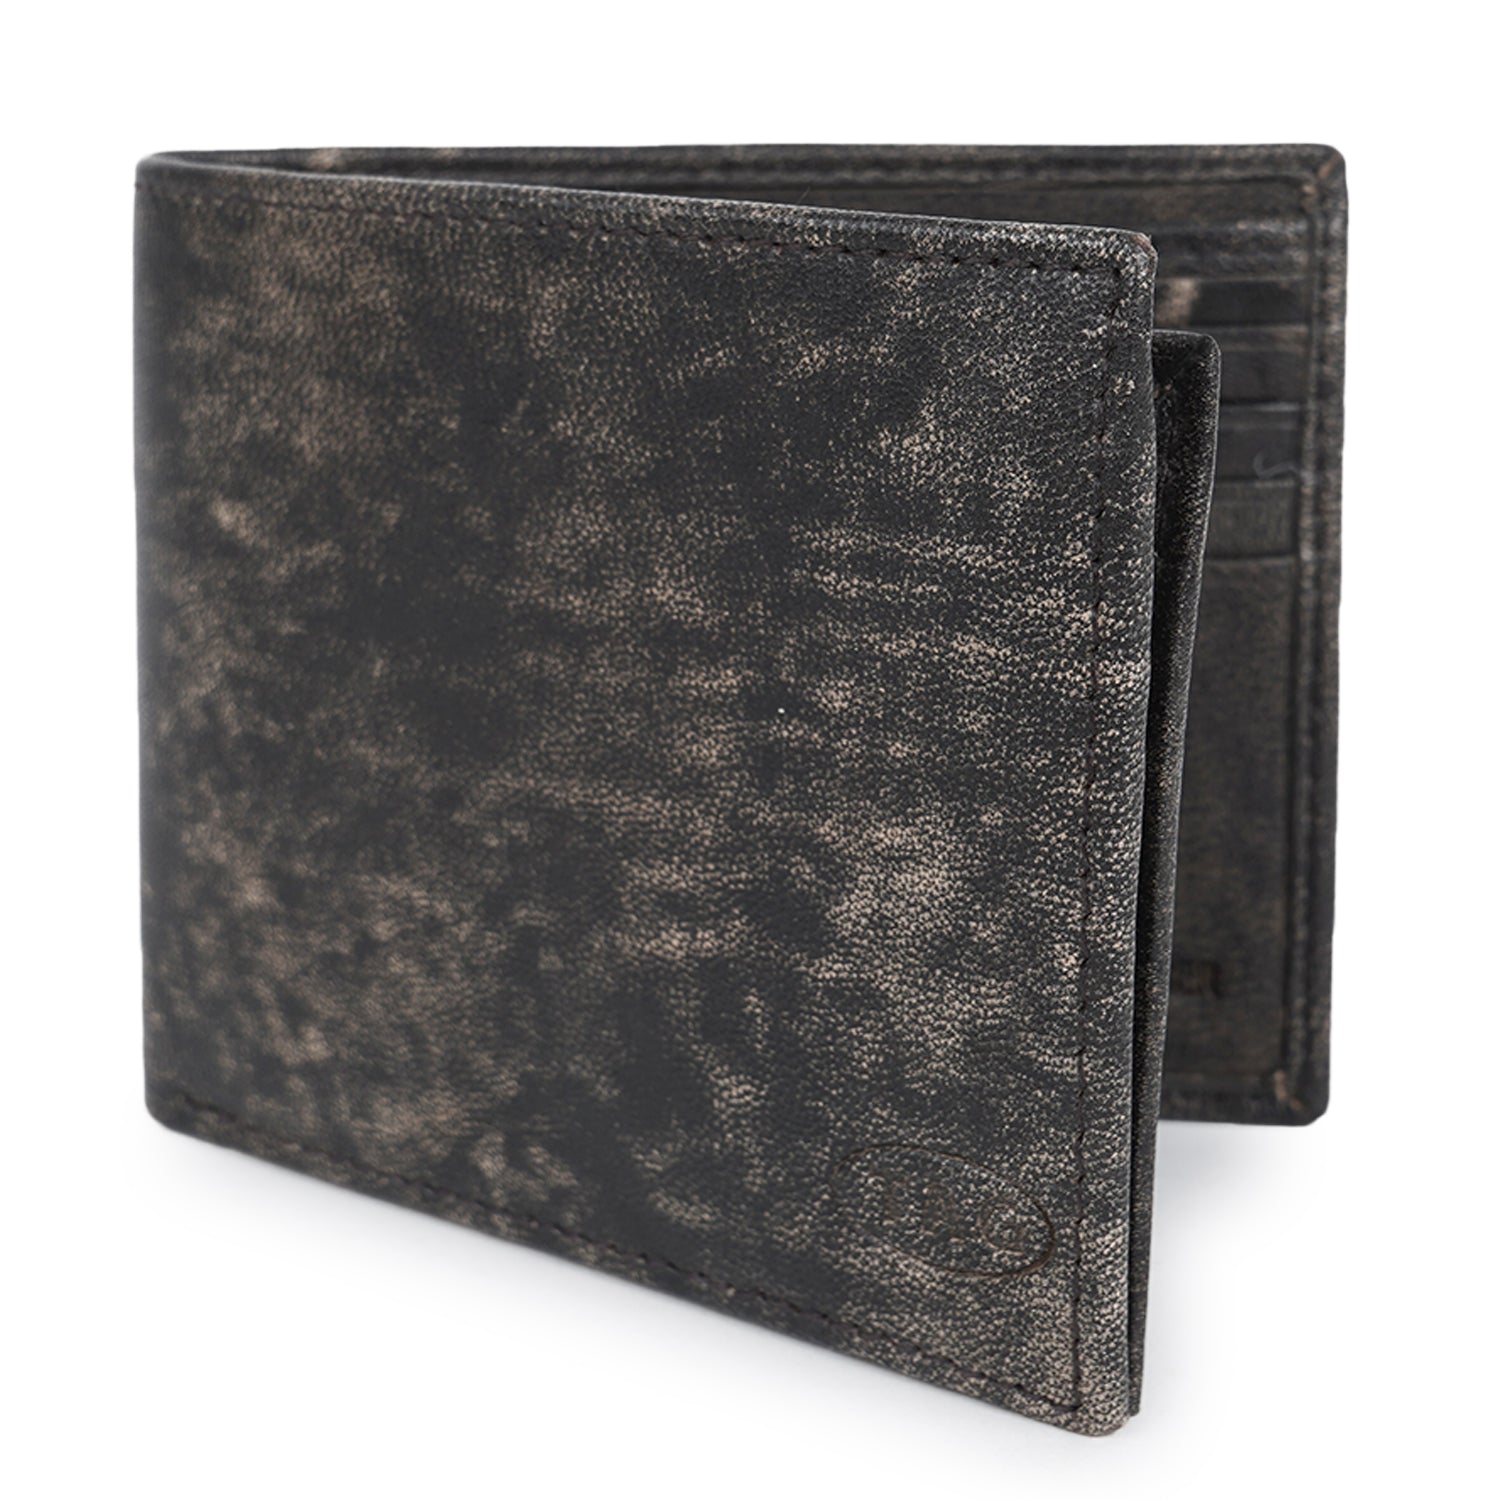 CIMONI Genuine Leather Casual Slim Multi Credit Cards Slot Ultra Slim RFID Wallet for Men